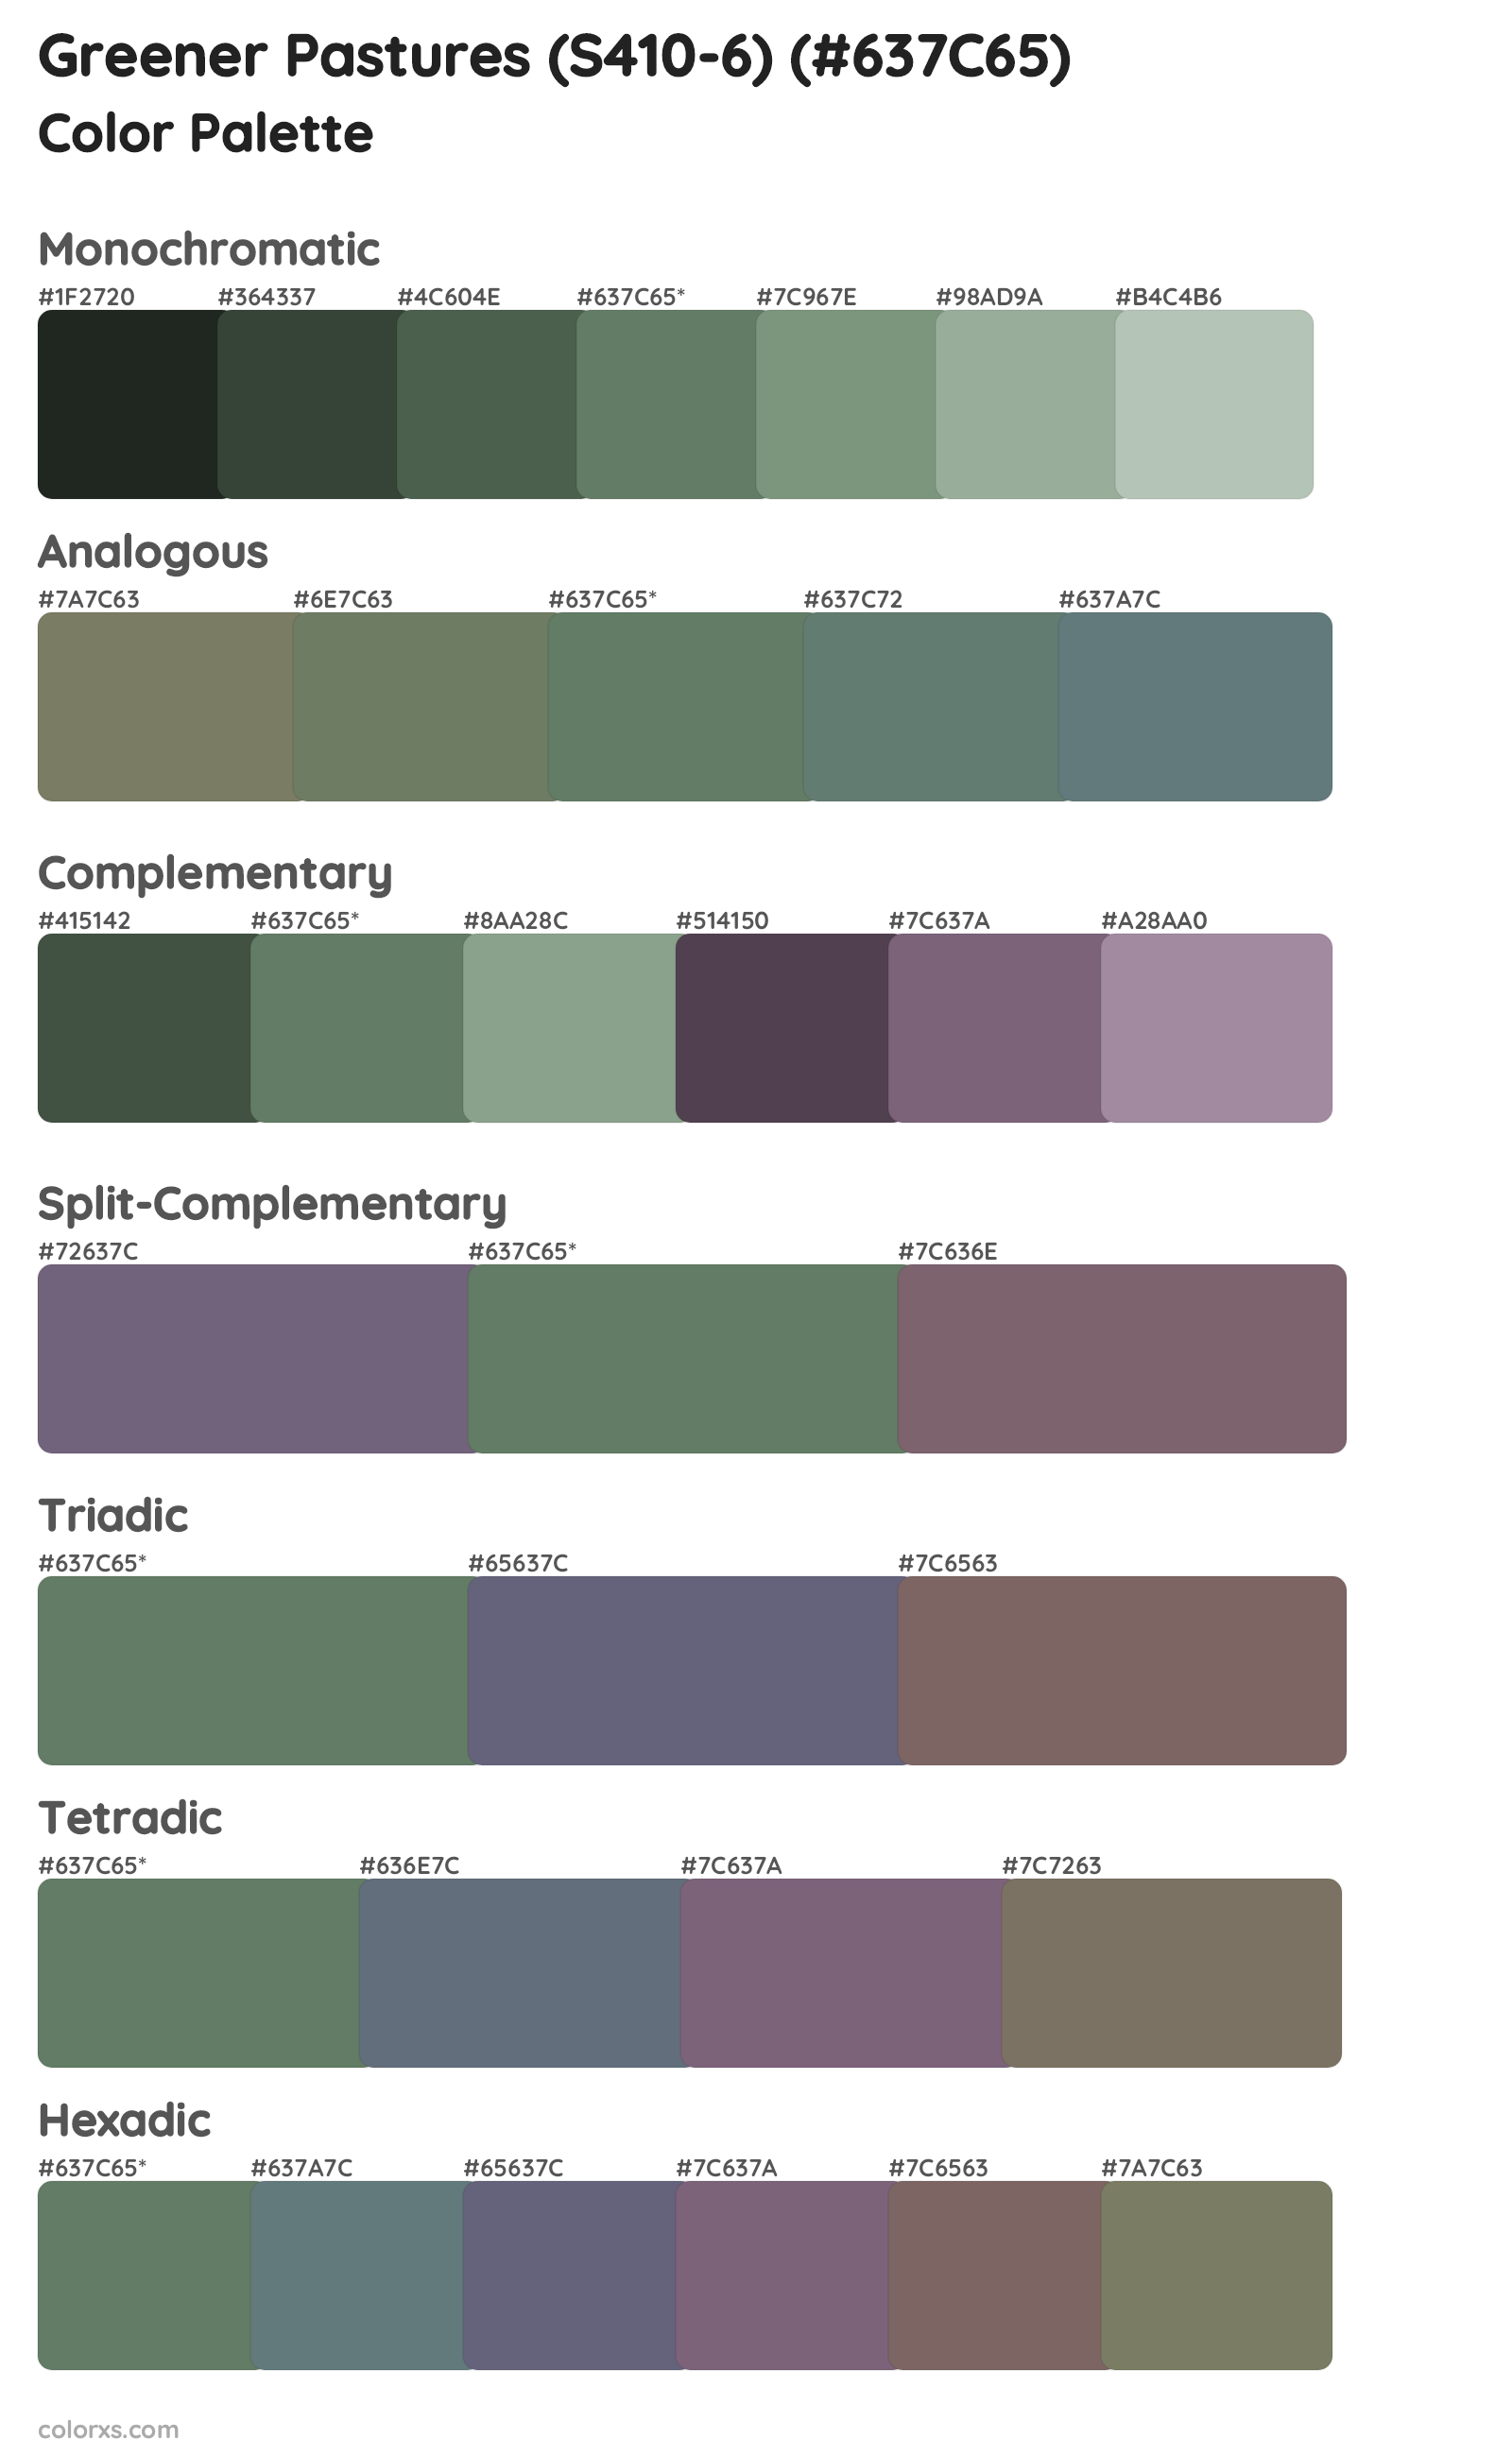 Greener Pastures (S410-6) Color Scheme Palettes